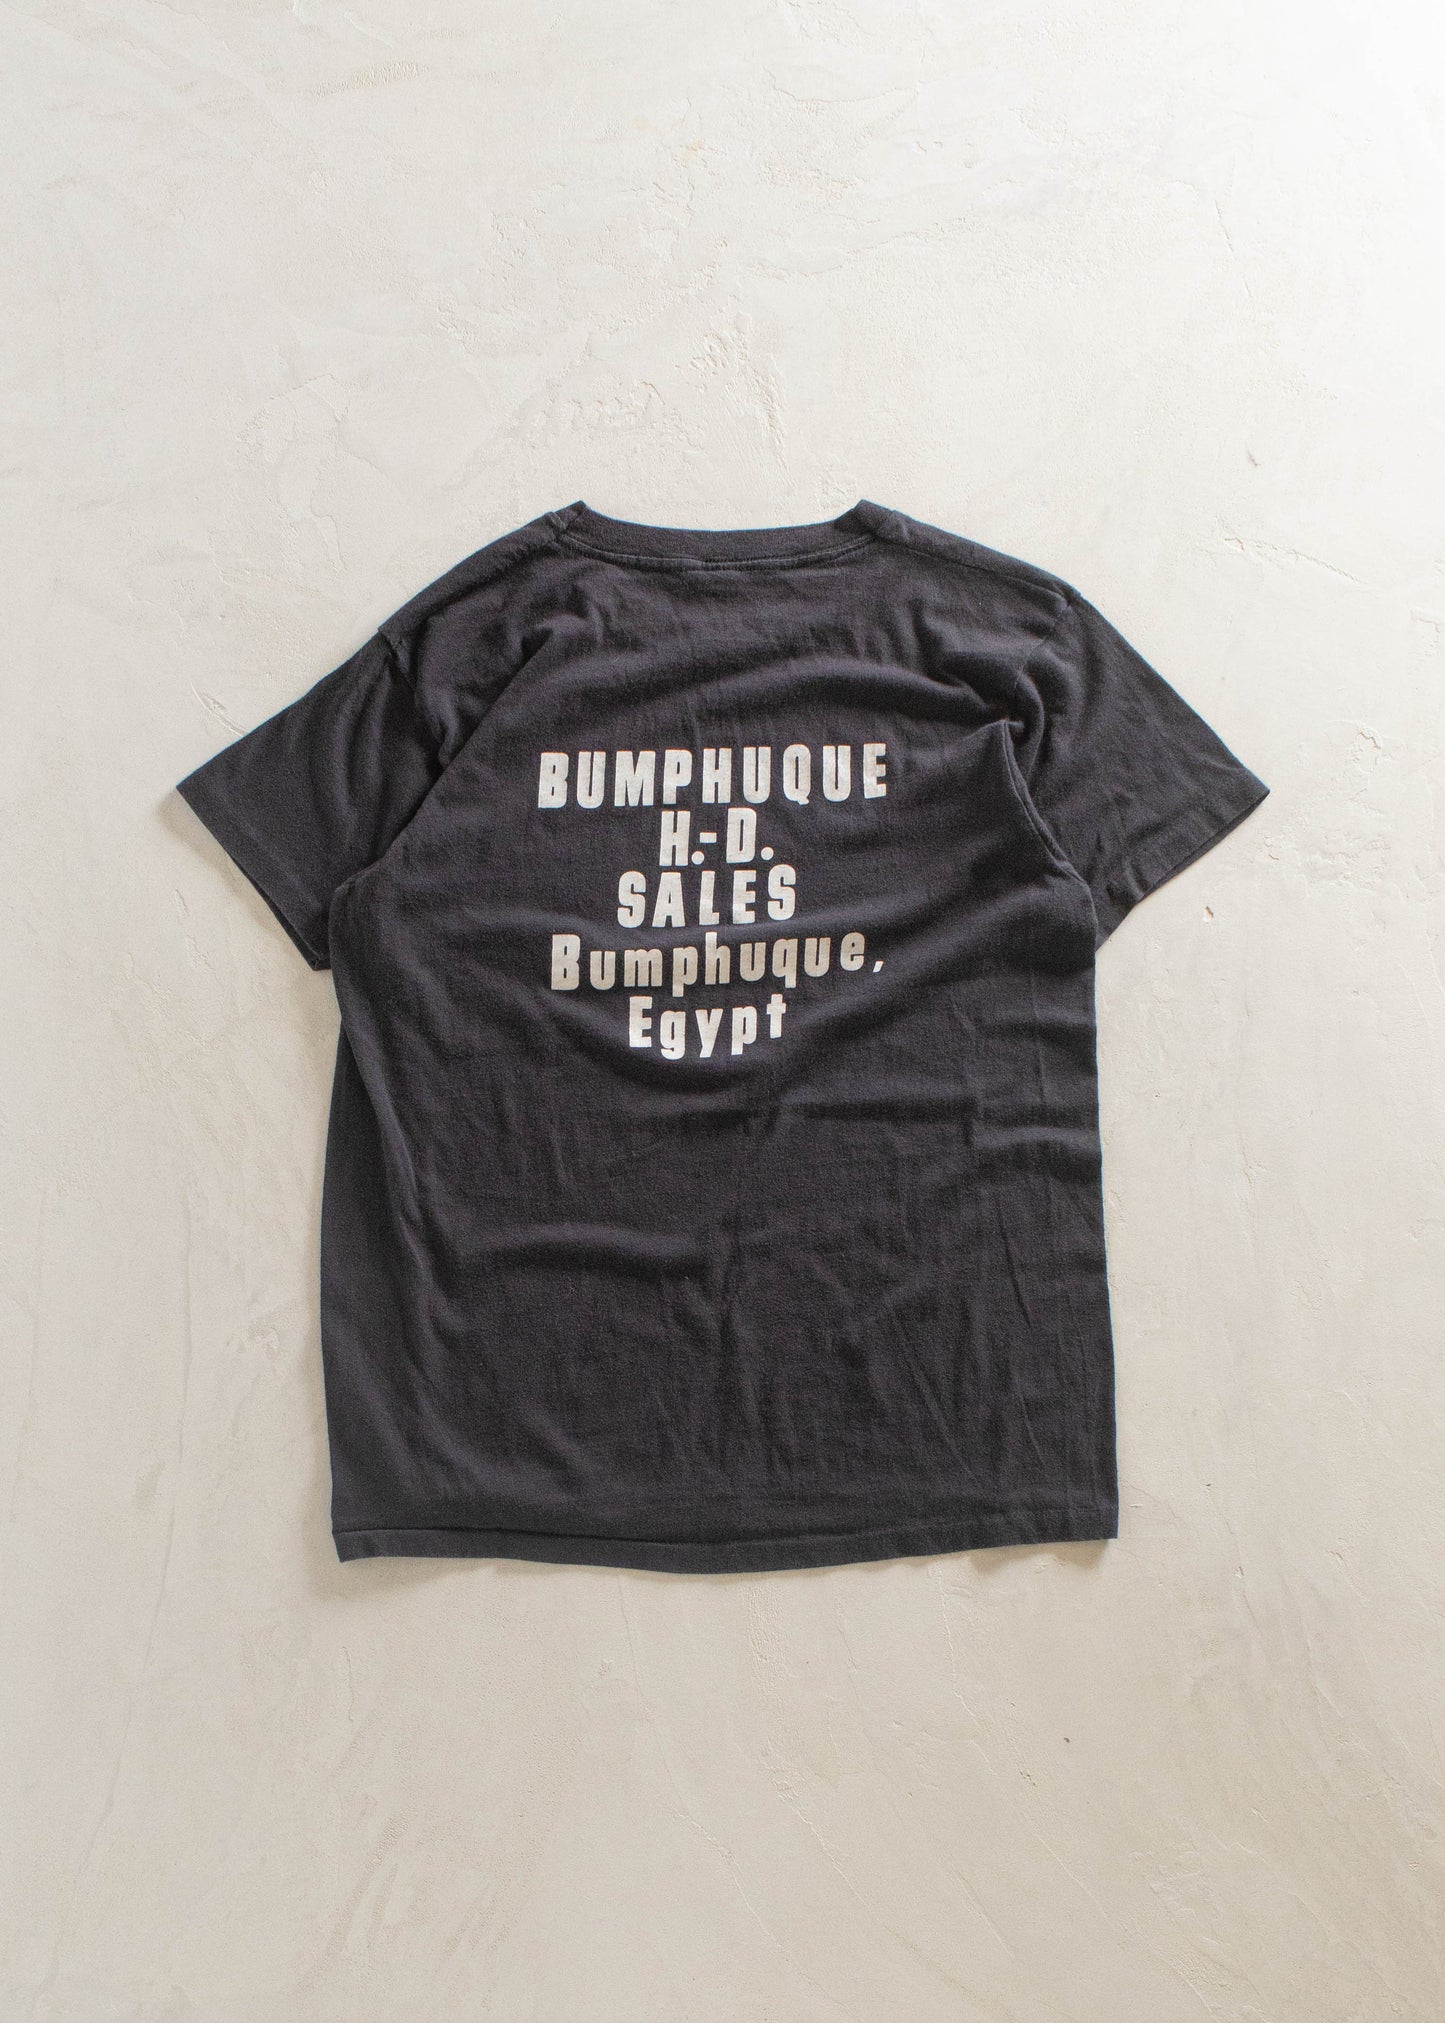 1980s Harley Davidson Bumphuque T-Shirt Size S/M